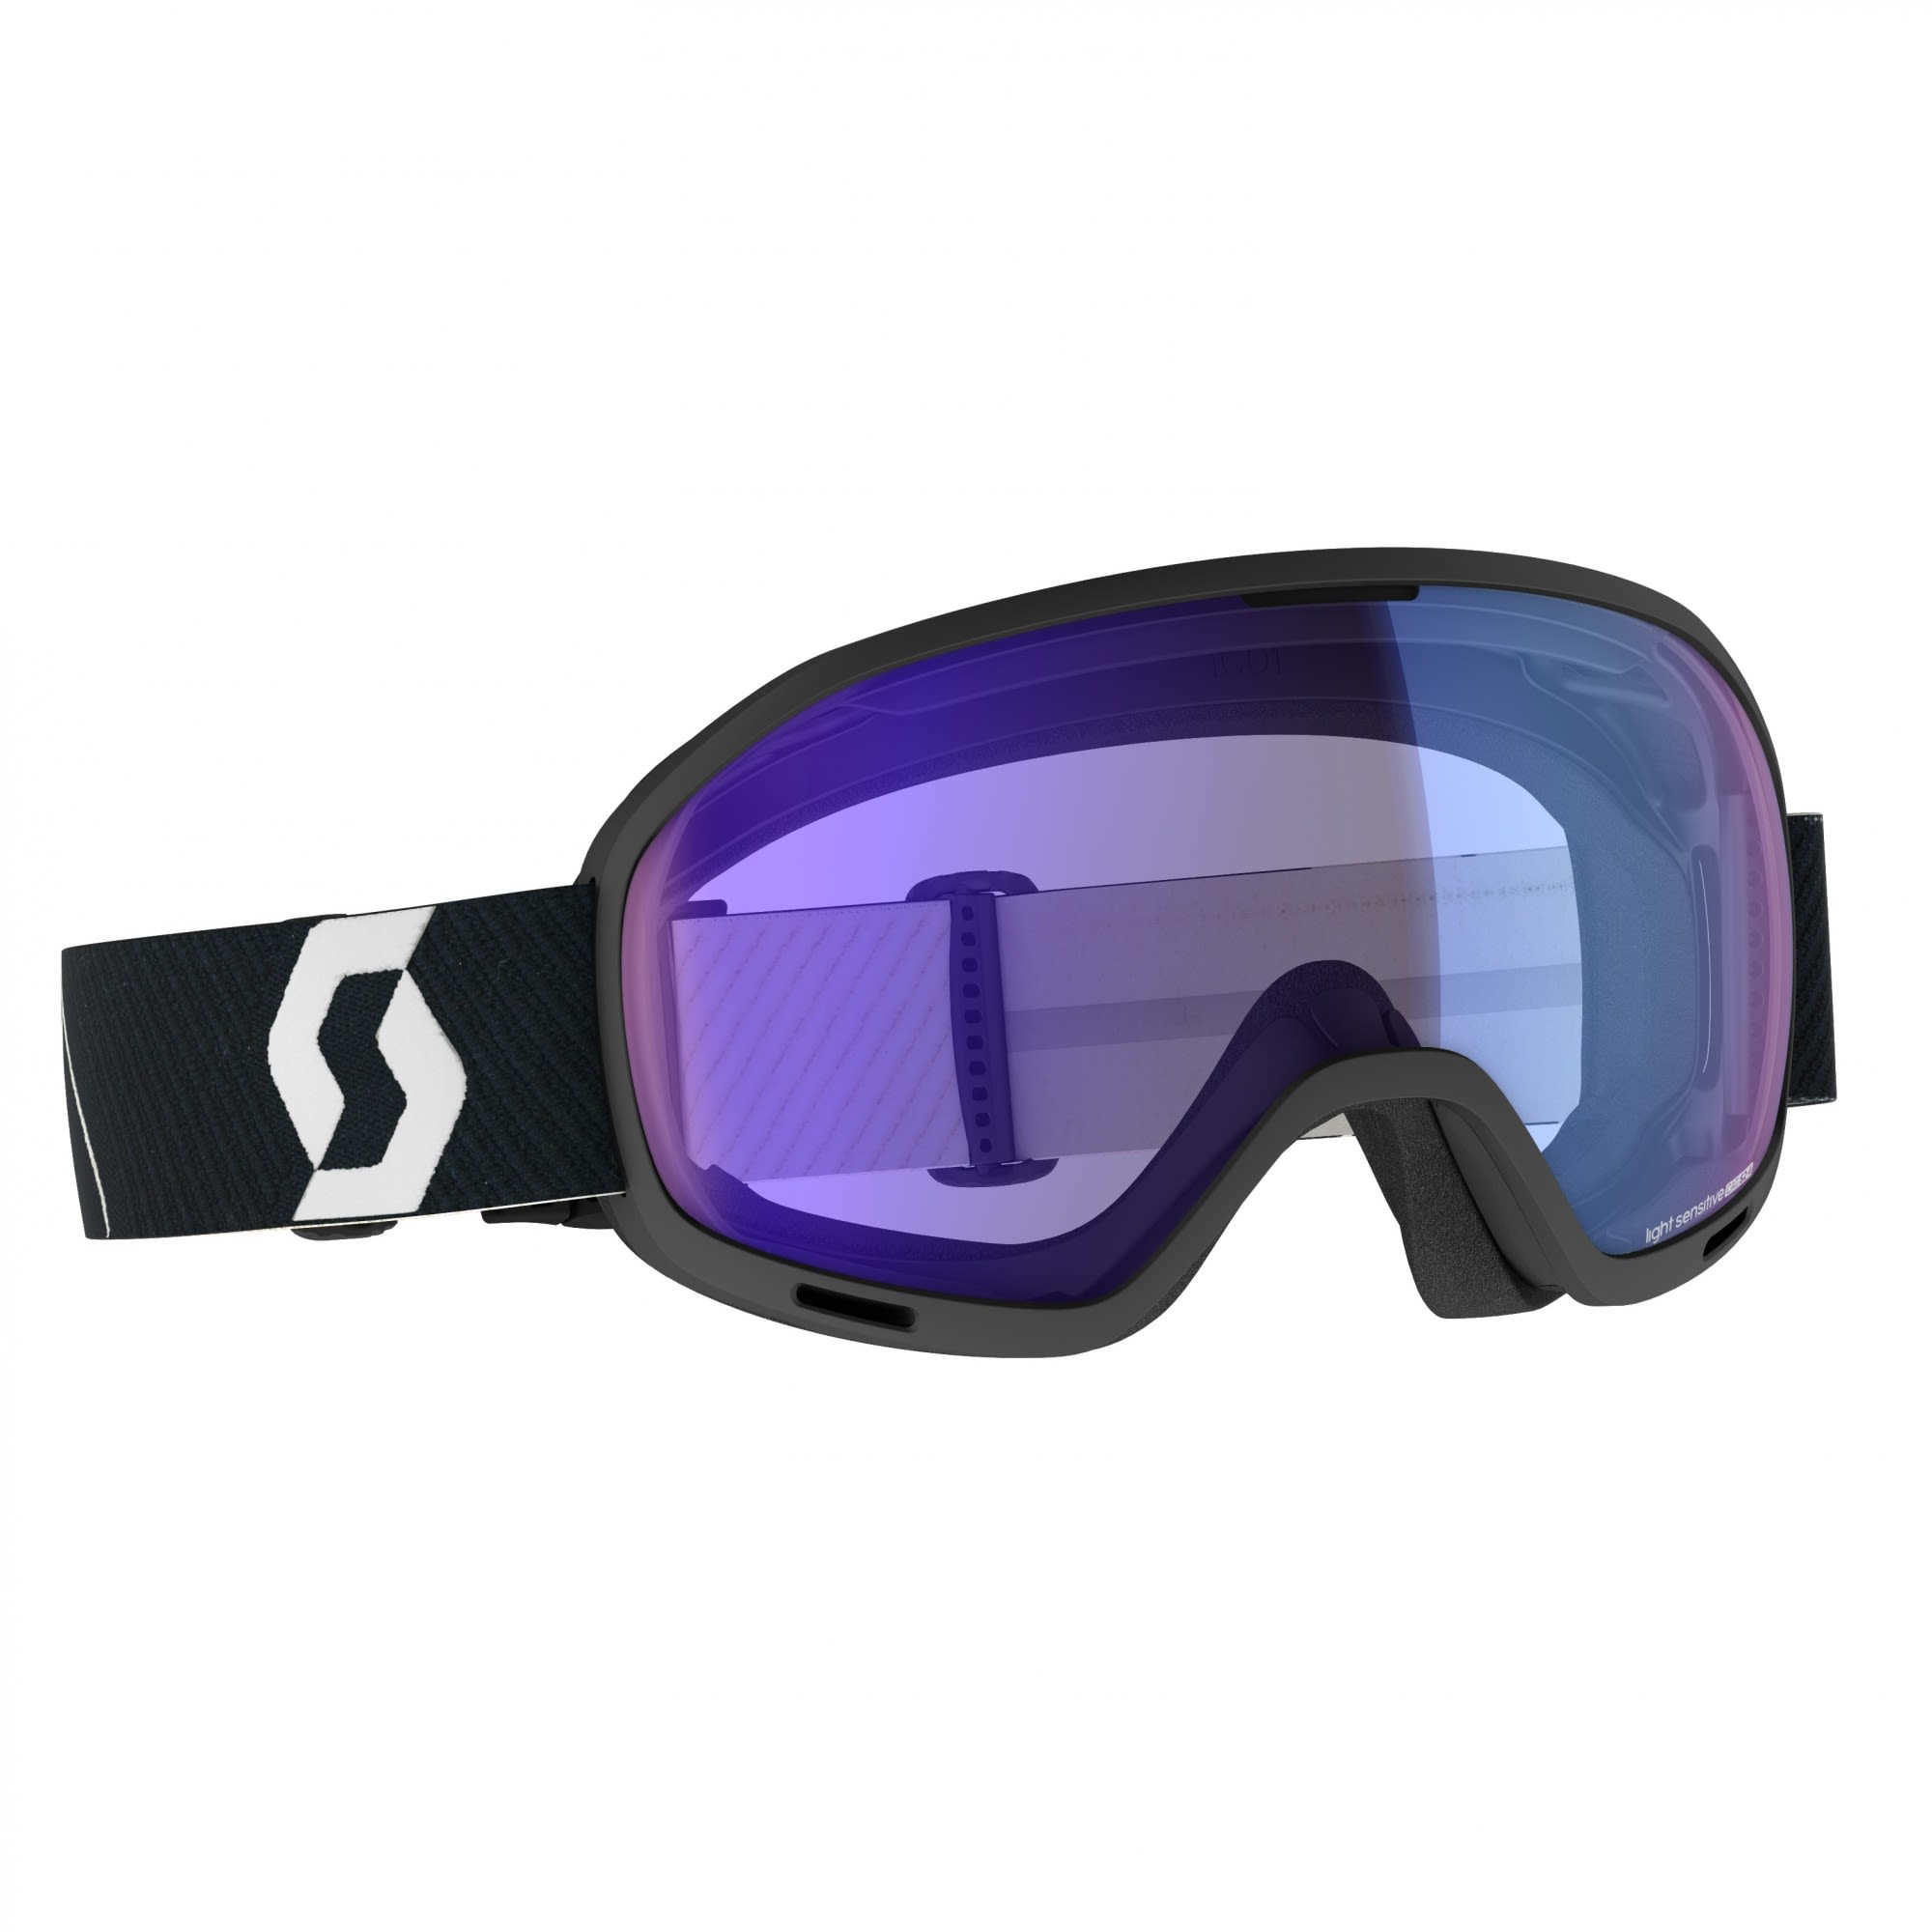 Scott Brillenkompatible komfortable Ski und Snowboardbrille Mountain Black - Illuminator Blue Chrome